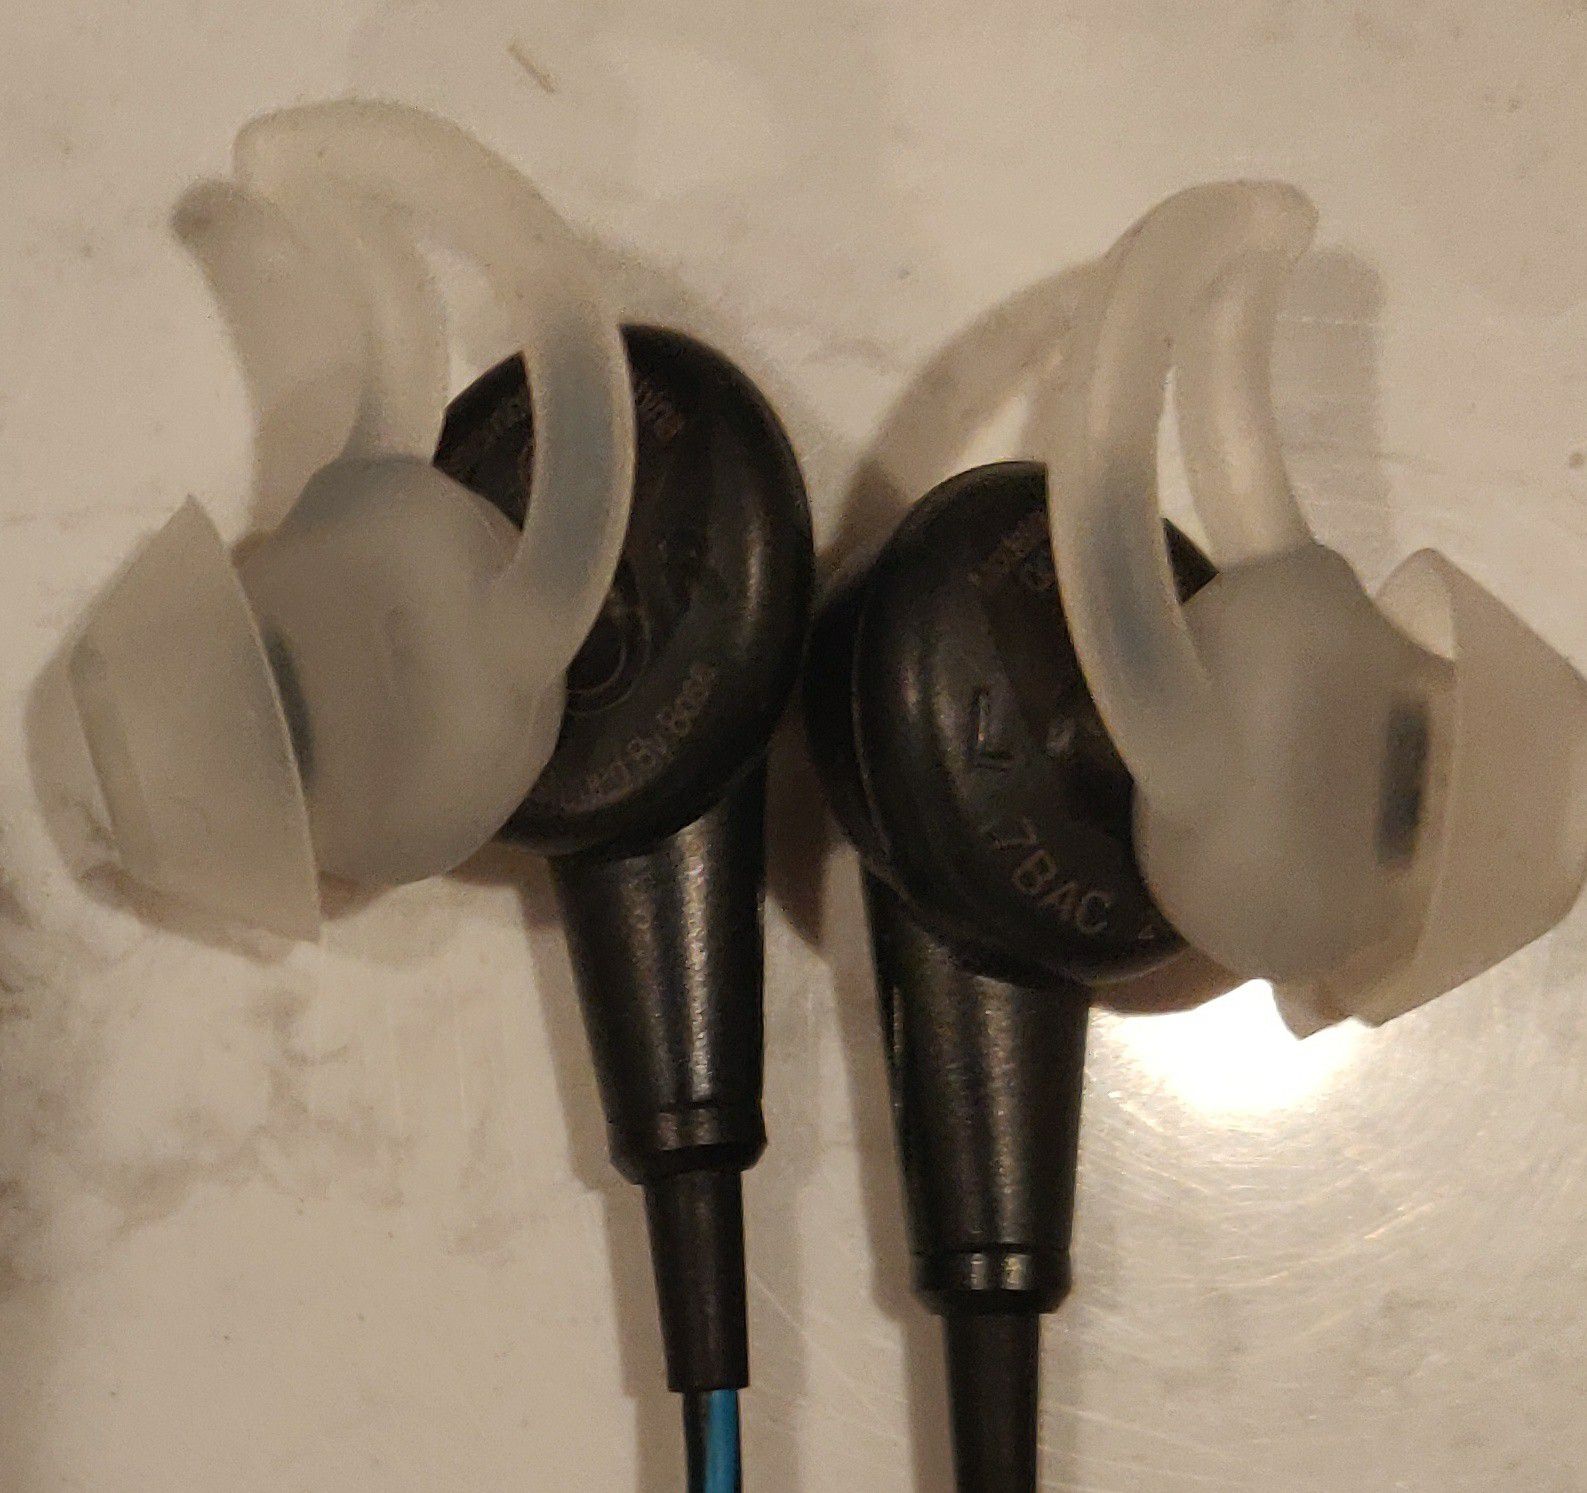 Bose QuietComfort 20 - noise cancelling headphones